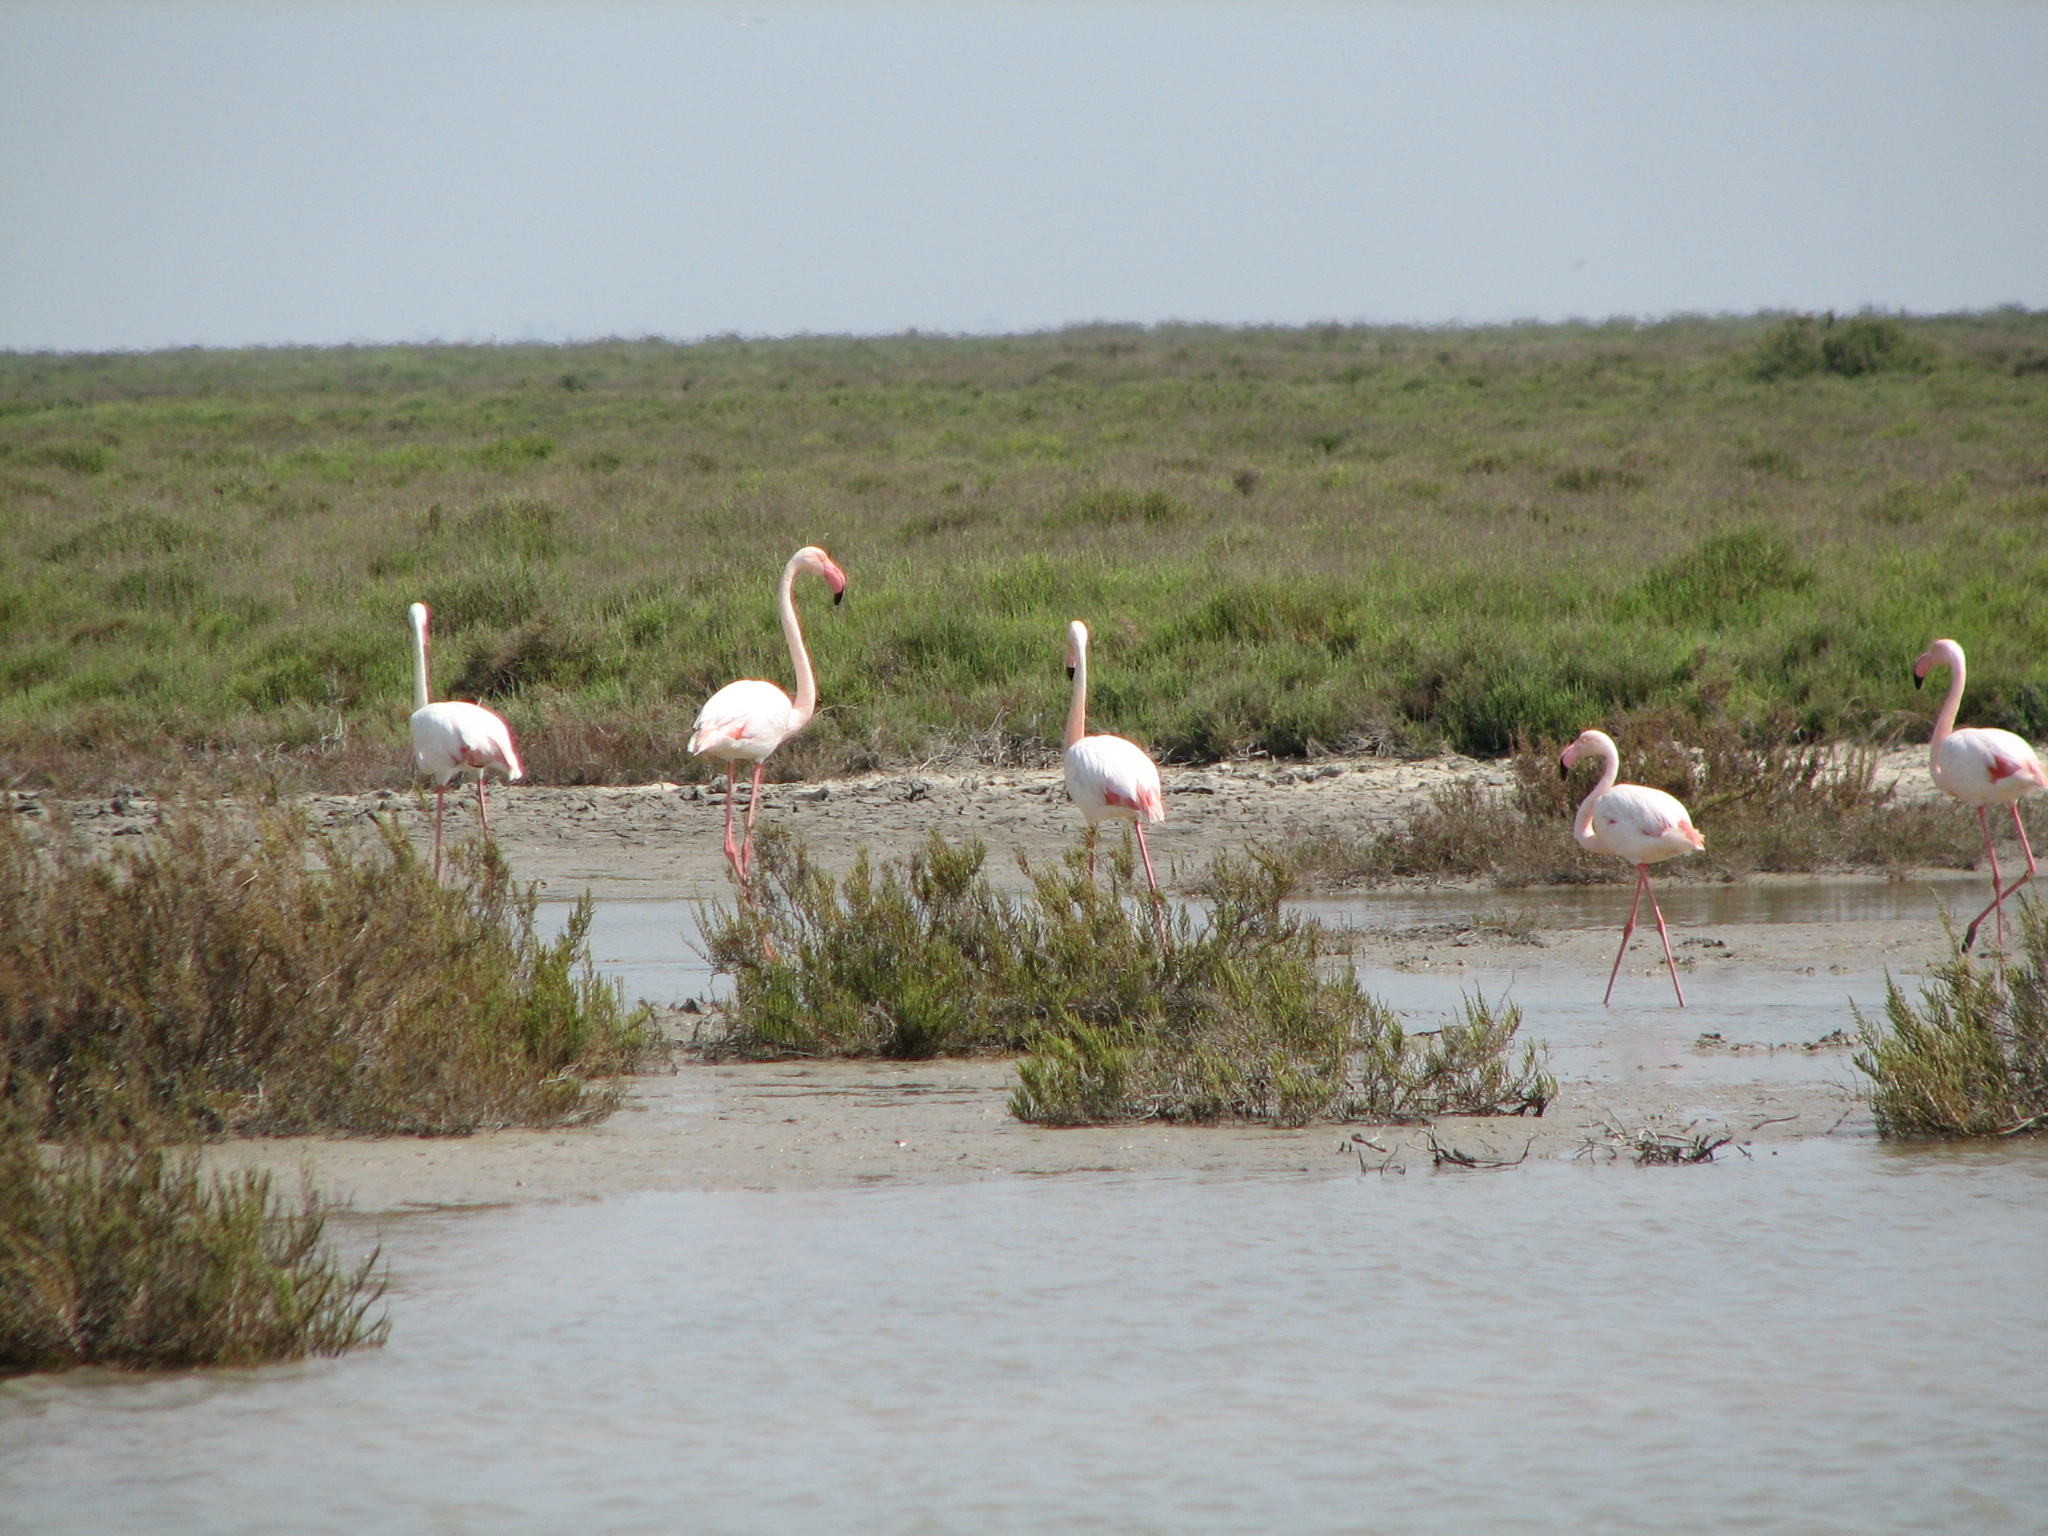 More flamingoes